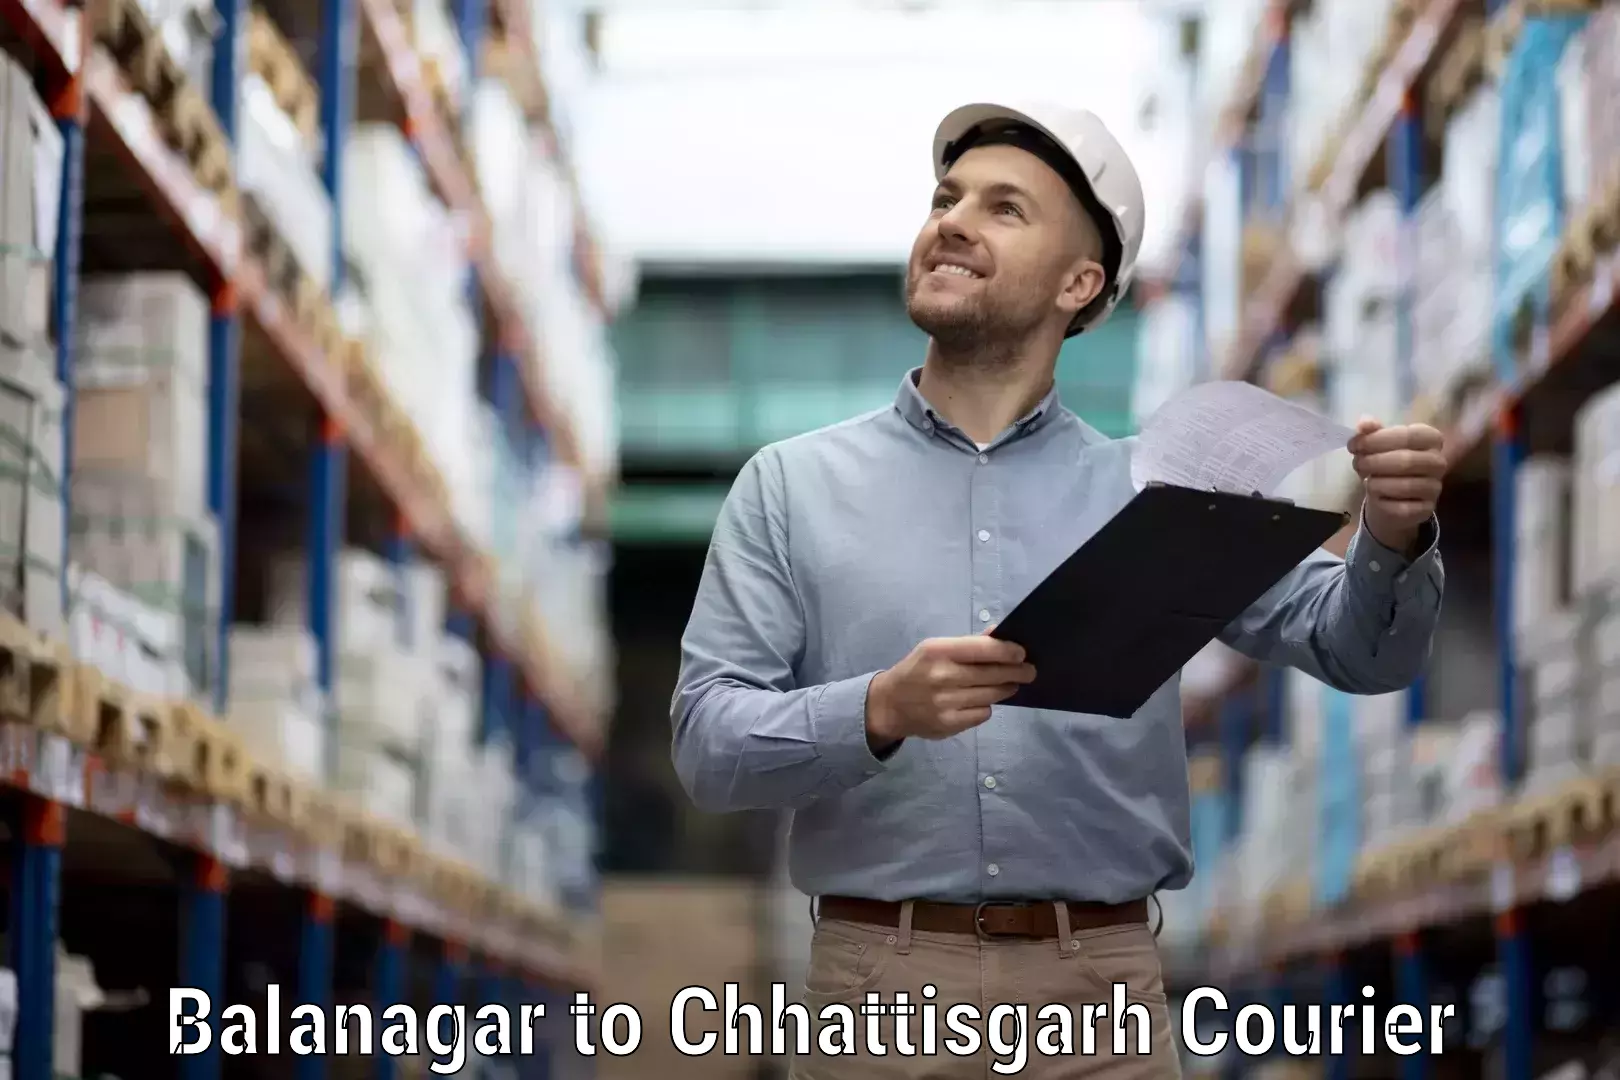 Professional parcel services Balanagar to Bijapur Chhattisgarh